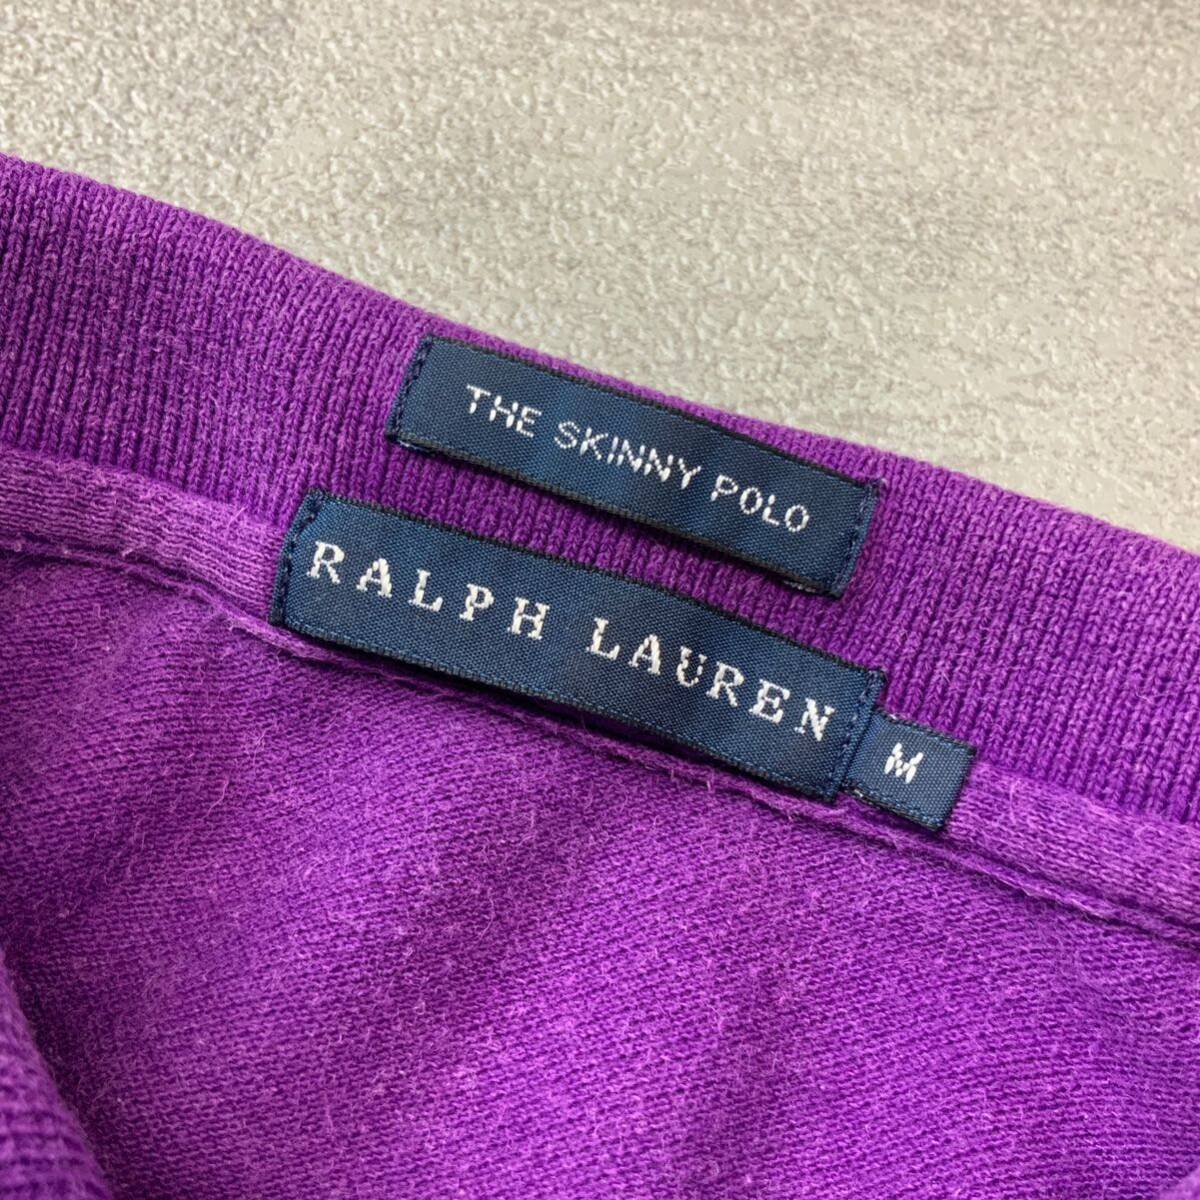 Ralph Lauren ラルフローレン ビッグポニー刺繍 鹿子 長袖 ポロシャツ レディース Mサイズ パープル グリーン刺繍